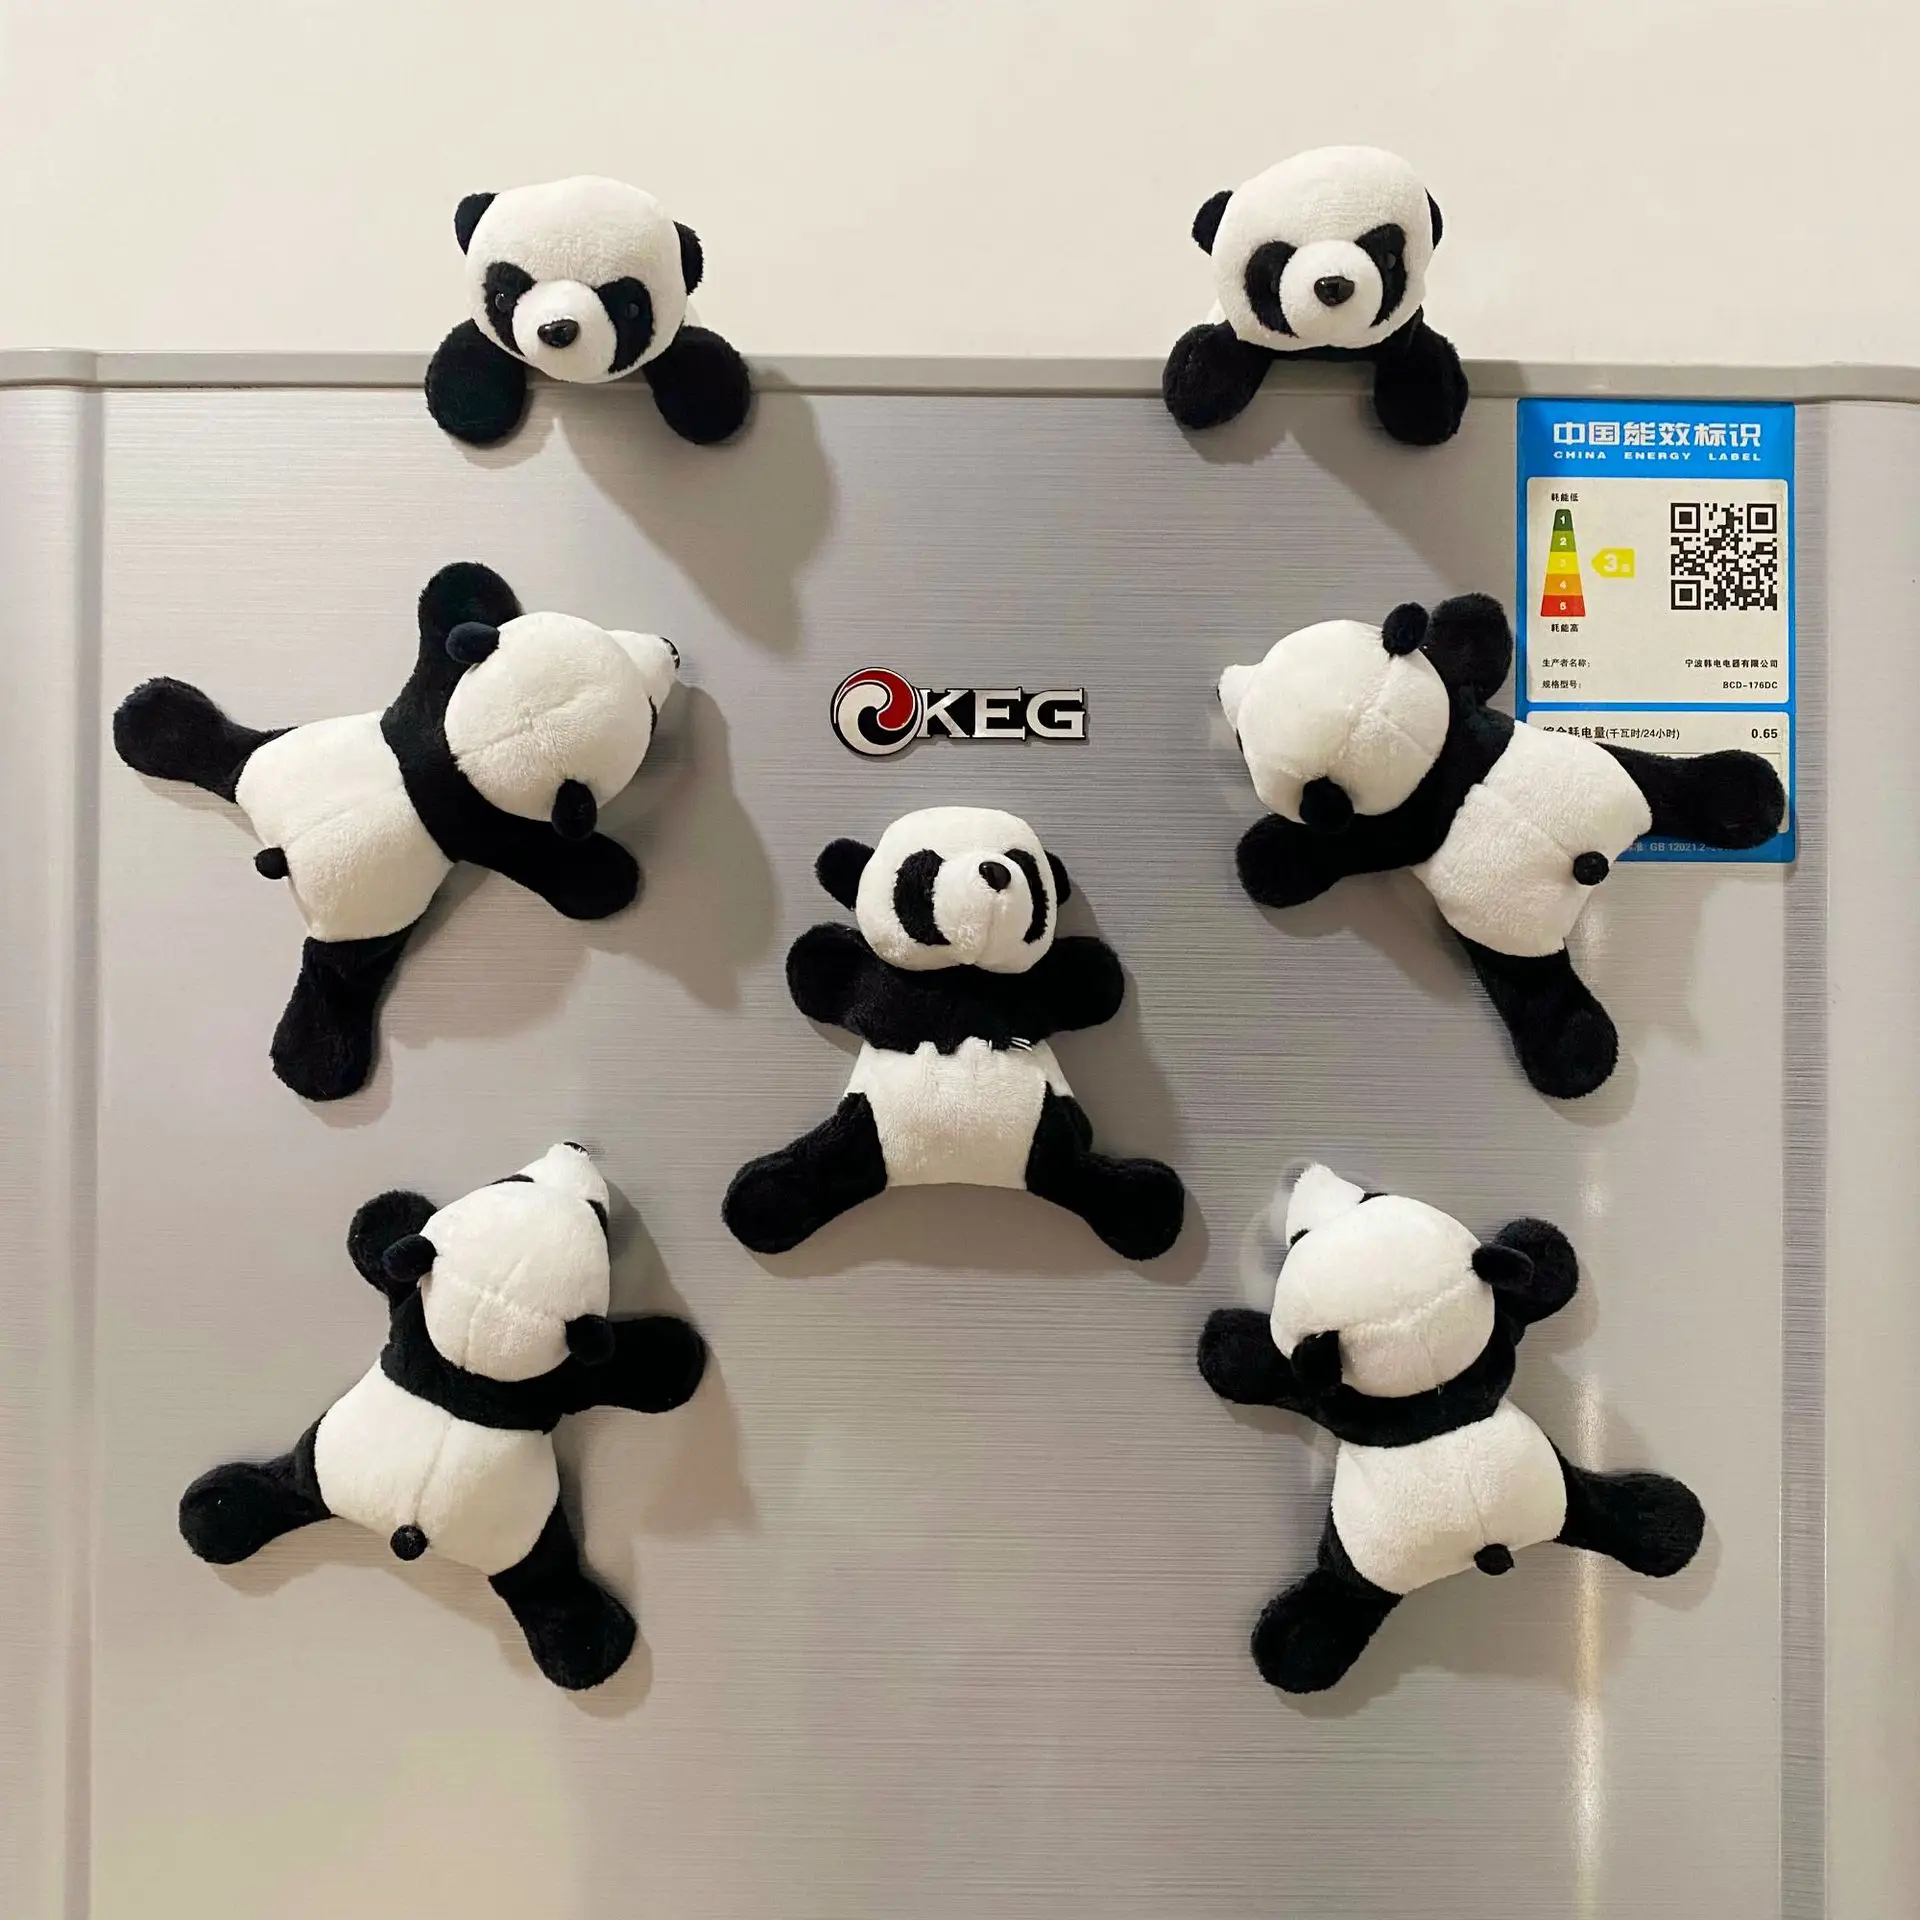 Large Plush Fridge Magnets For Kids Gift Toy Stuff Soft Magneticos Fridge Decorative Cartoon Animal Refrigerator Magnets Panda